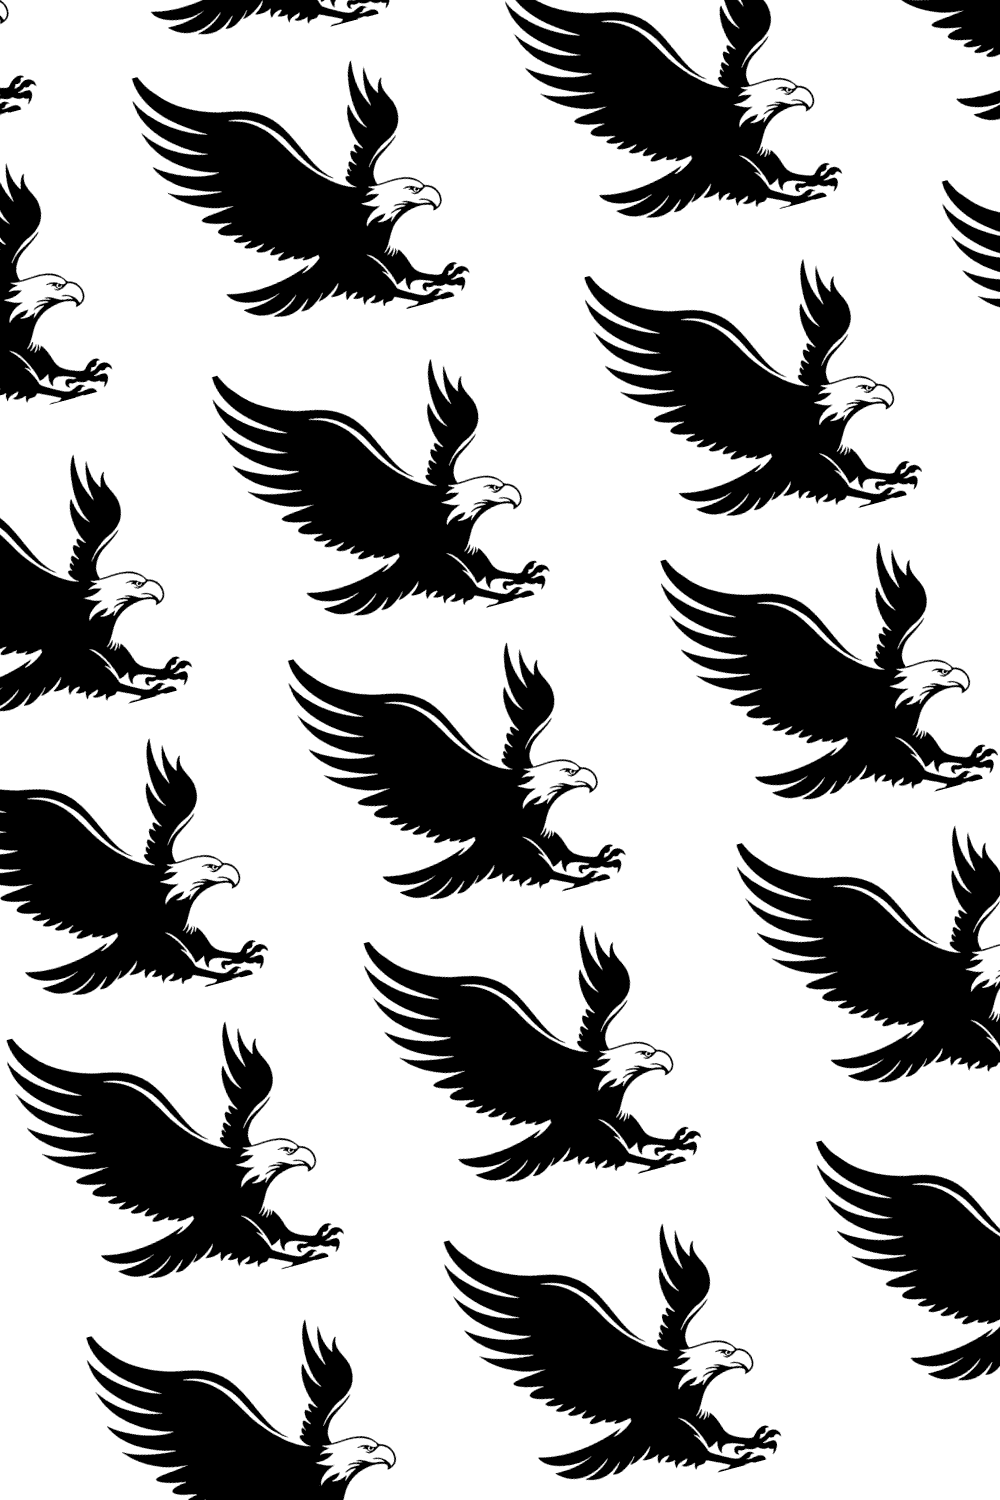 Eagle,American Eagle, American Symbol - A Flock of Eagles InThe Background.